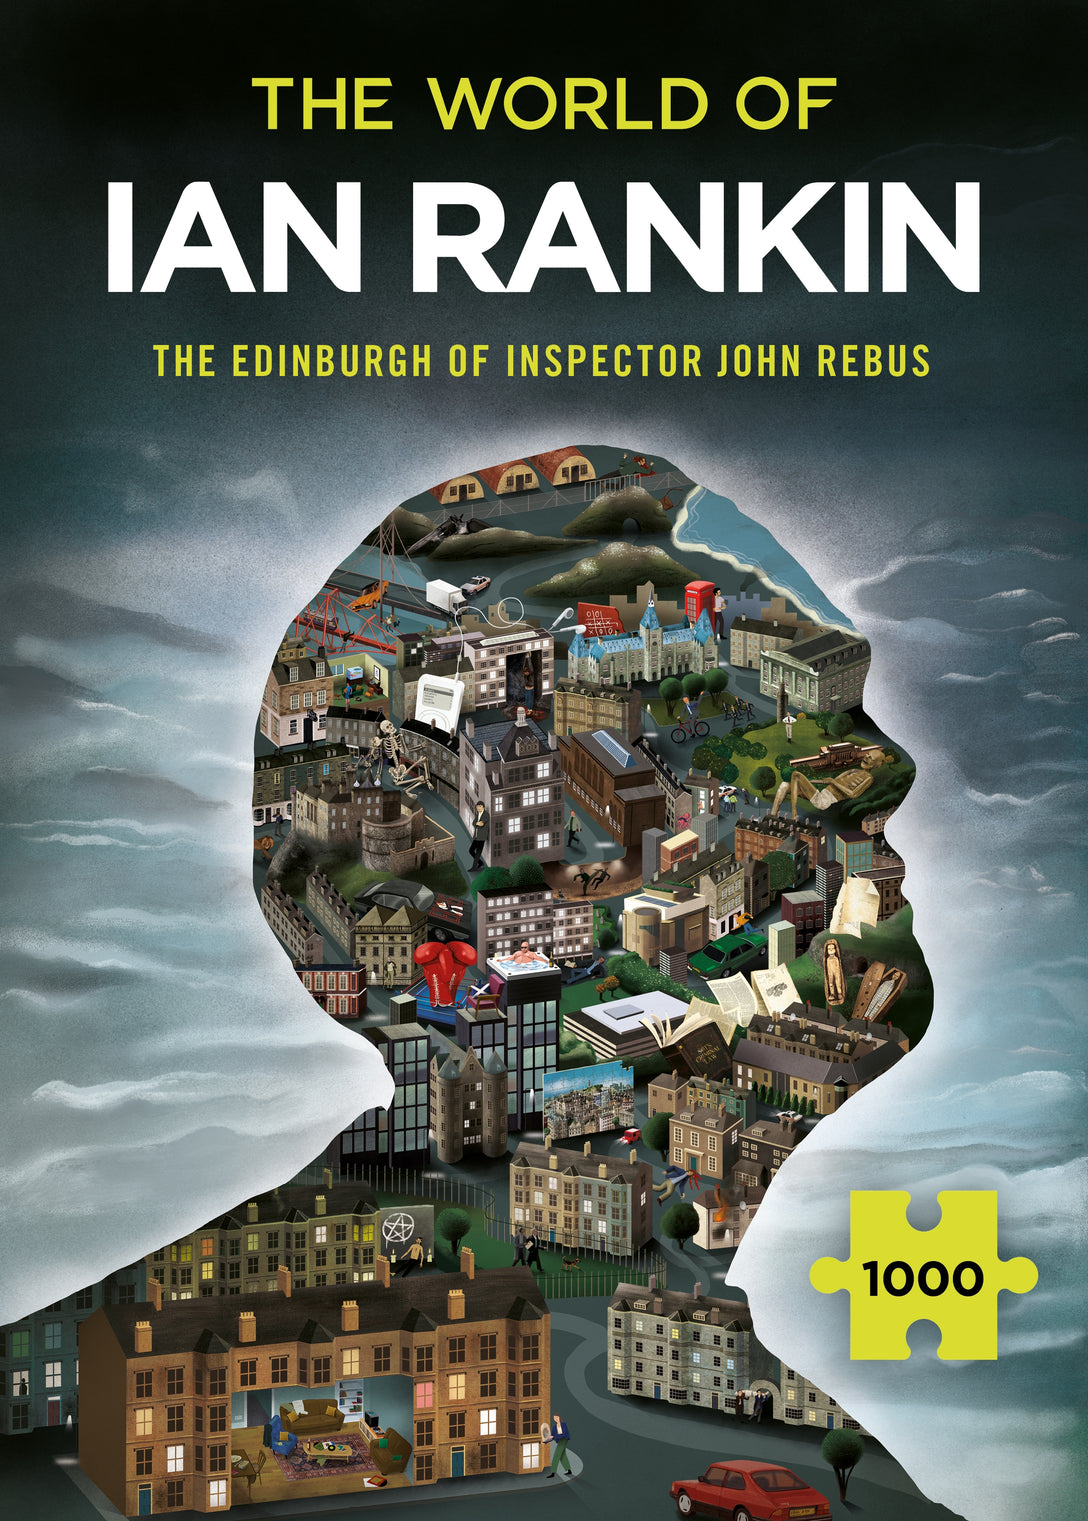 The World of Ian Rankin: The Edinburgh of Inspector John Rebus by Ian Rankin, Barry Falls